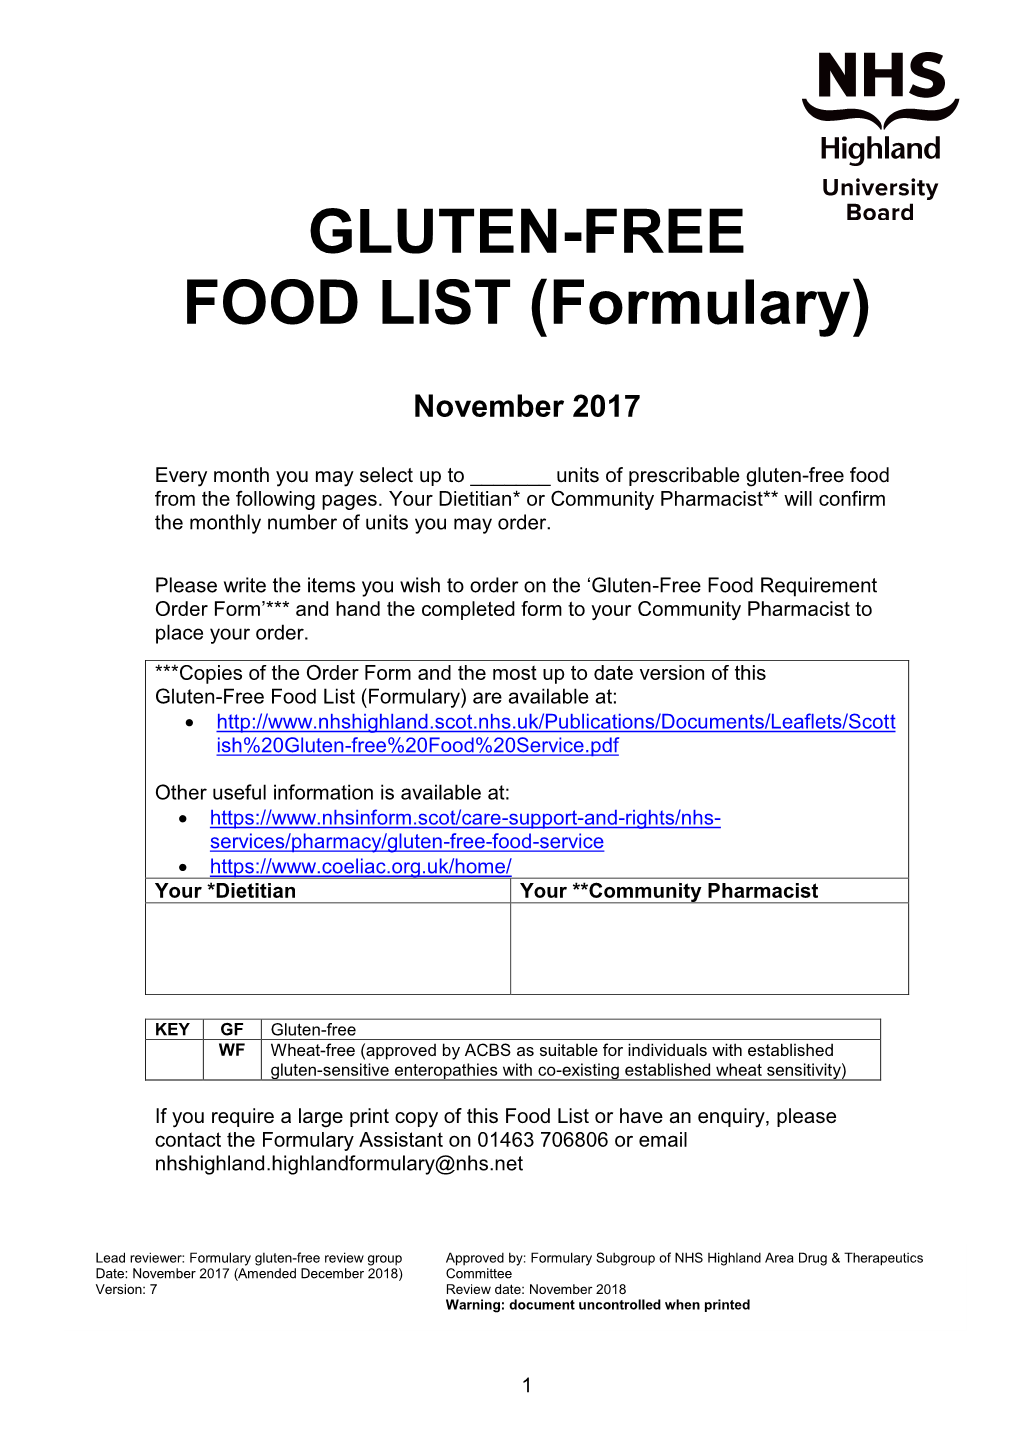 GLUTEN-FREE FOOD LIST (Formulary)